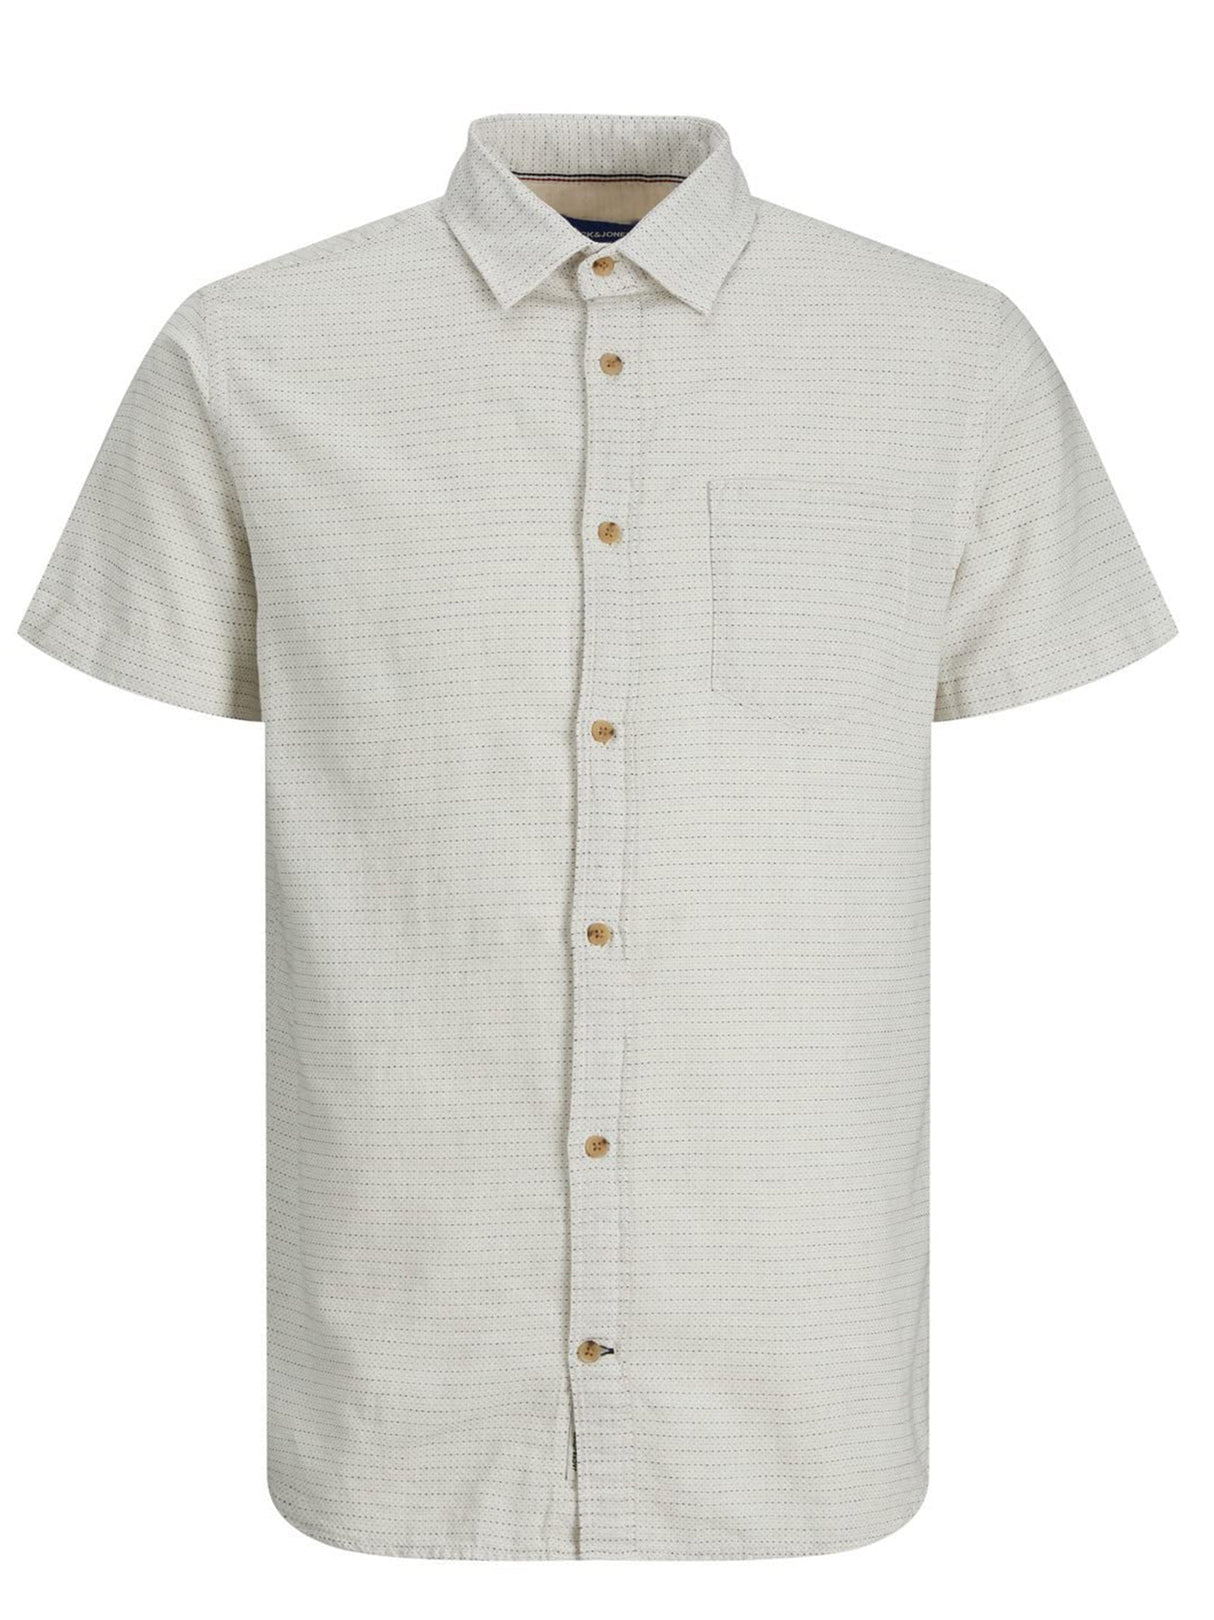 Image for Men's Embroidered Short Sleeve Dress Shirt,Multi